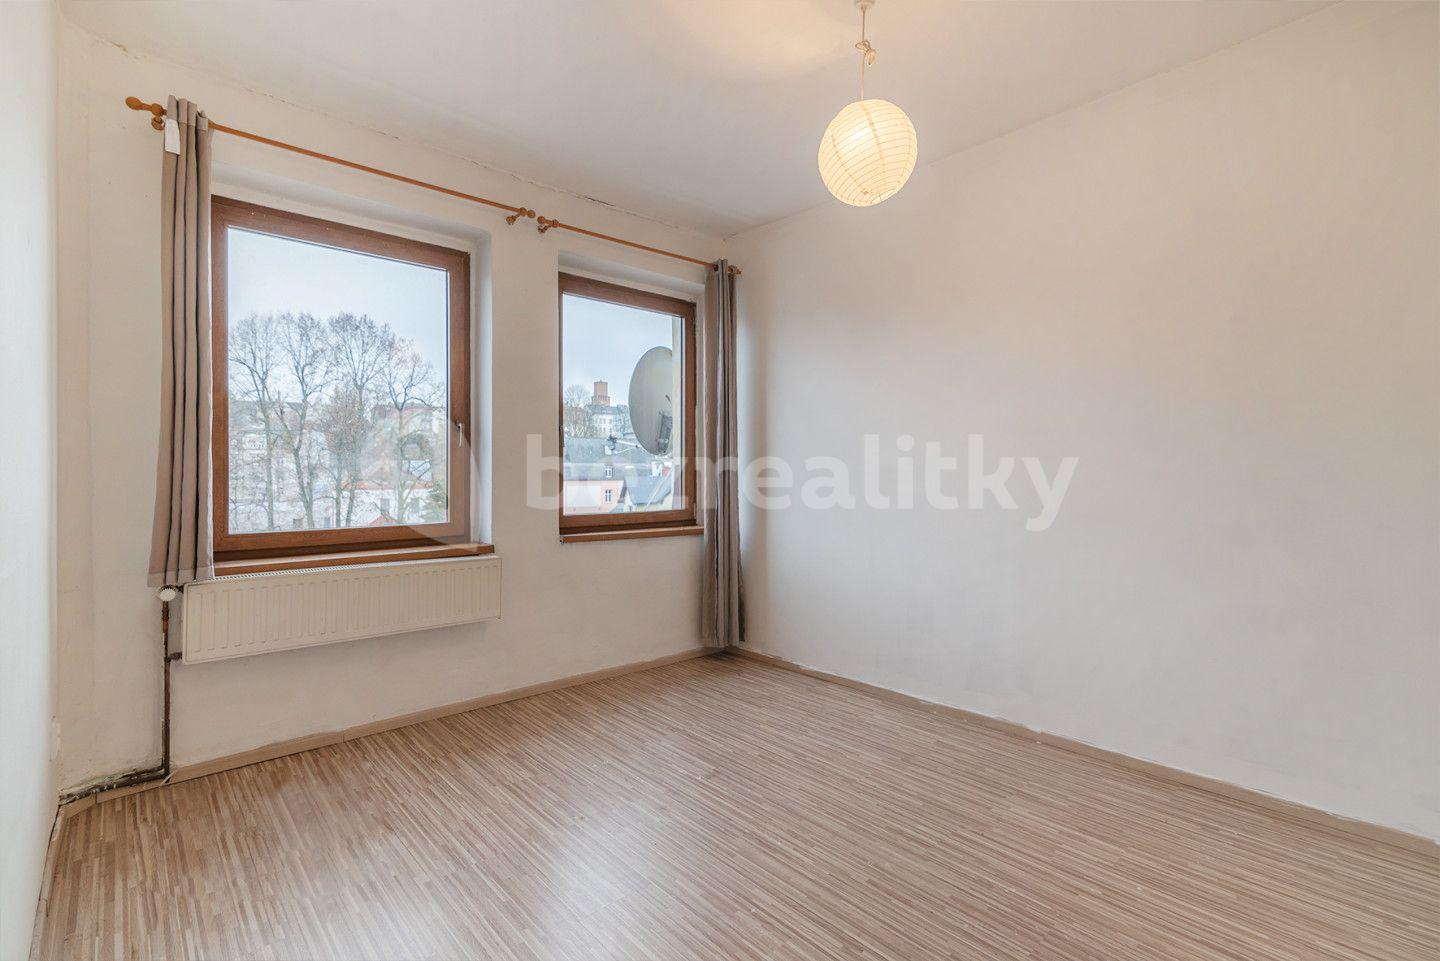 Prodej bytu 2+1 62 m², Smetanova, Jablonec nad Nisou, Liberecký kraj